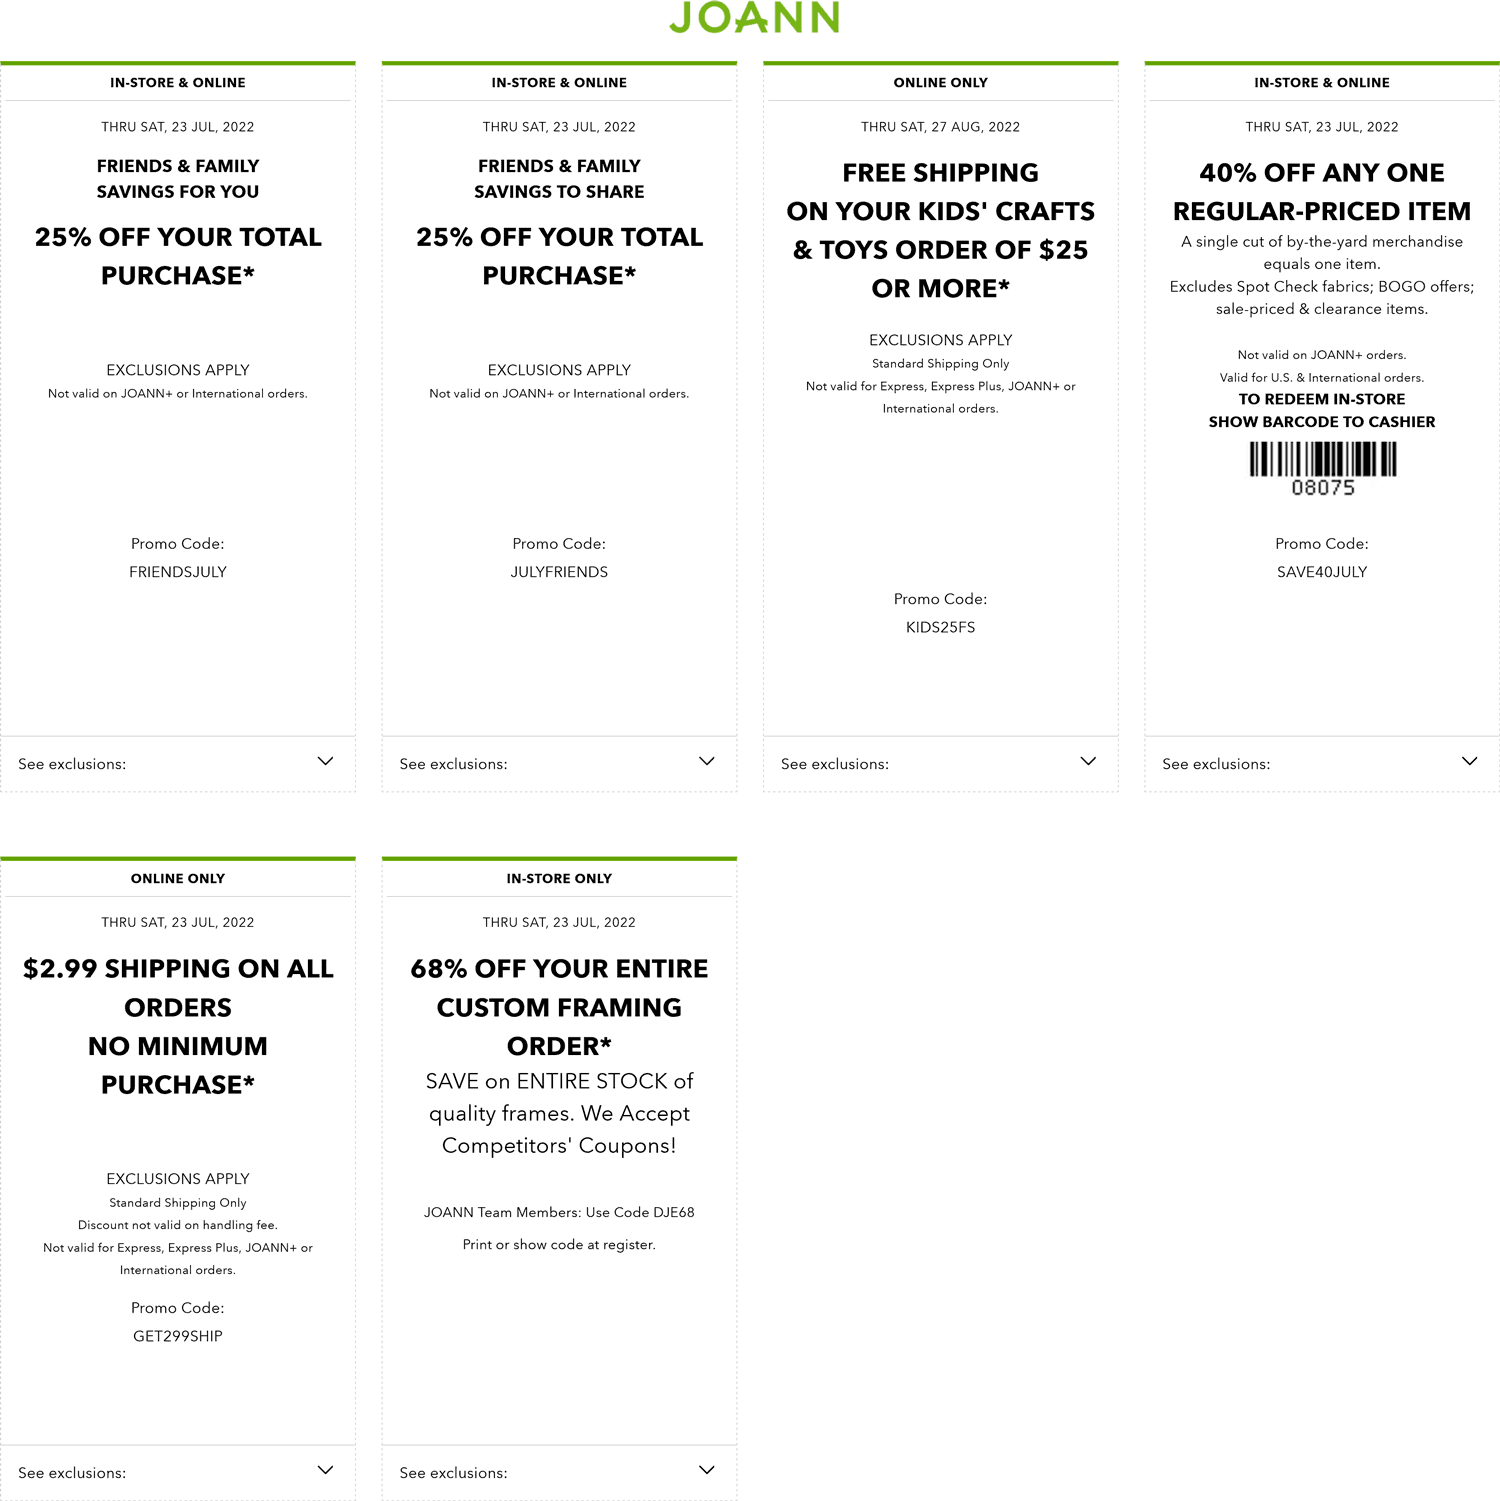 Joann coupons & promo code for [December 2022]